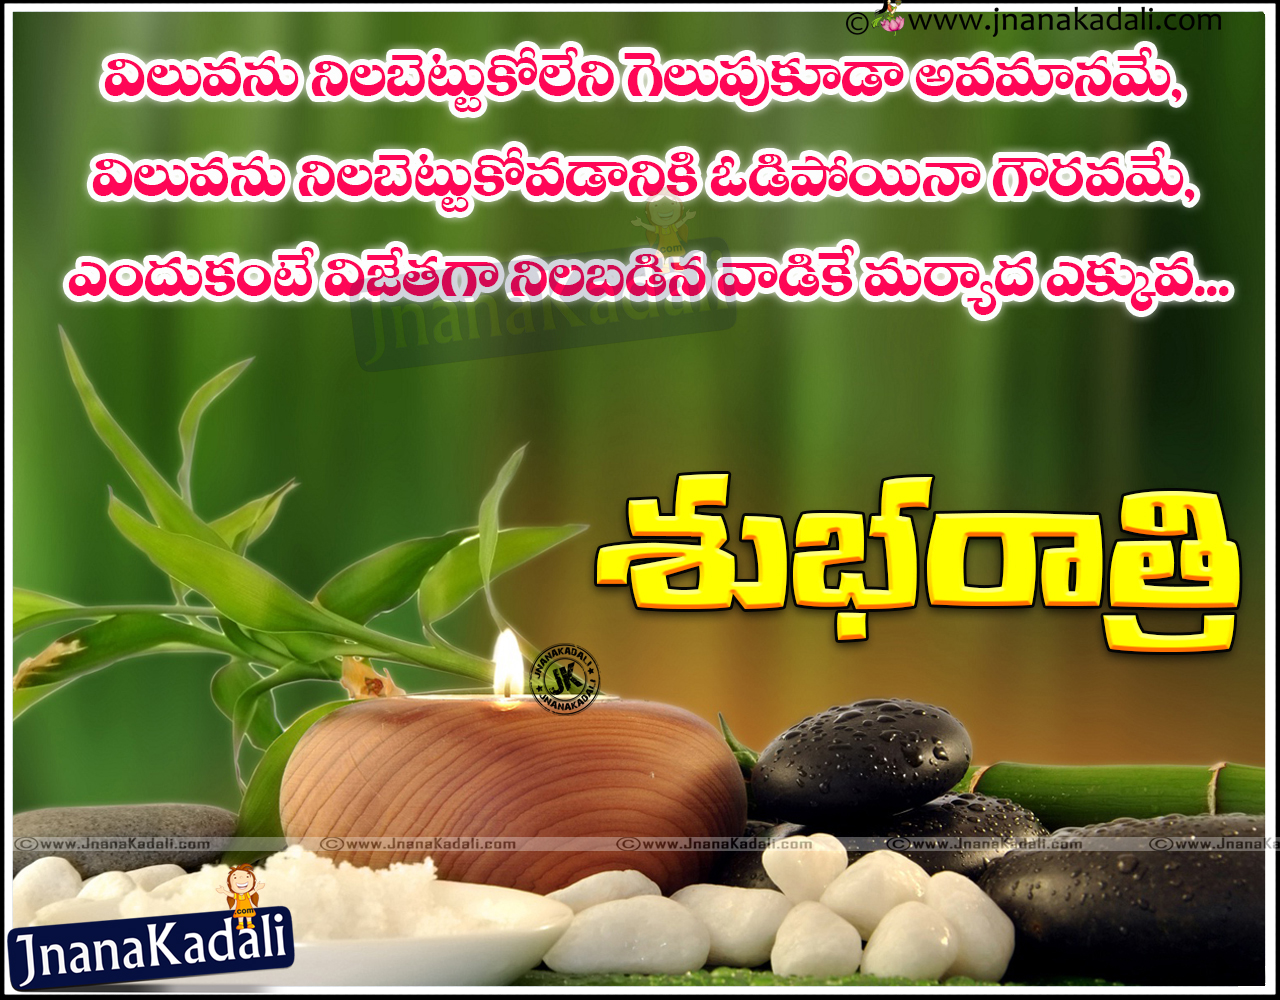 Best Telugu Good night status messages for Friends | JNANA KADALI ...